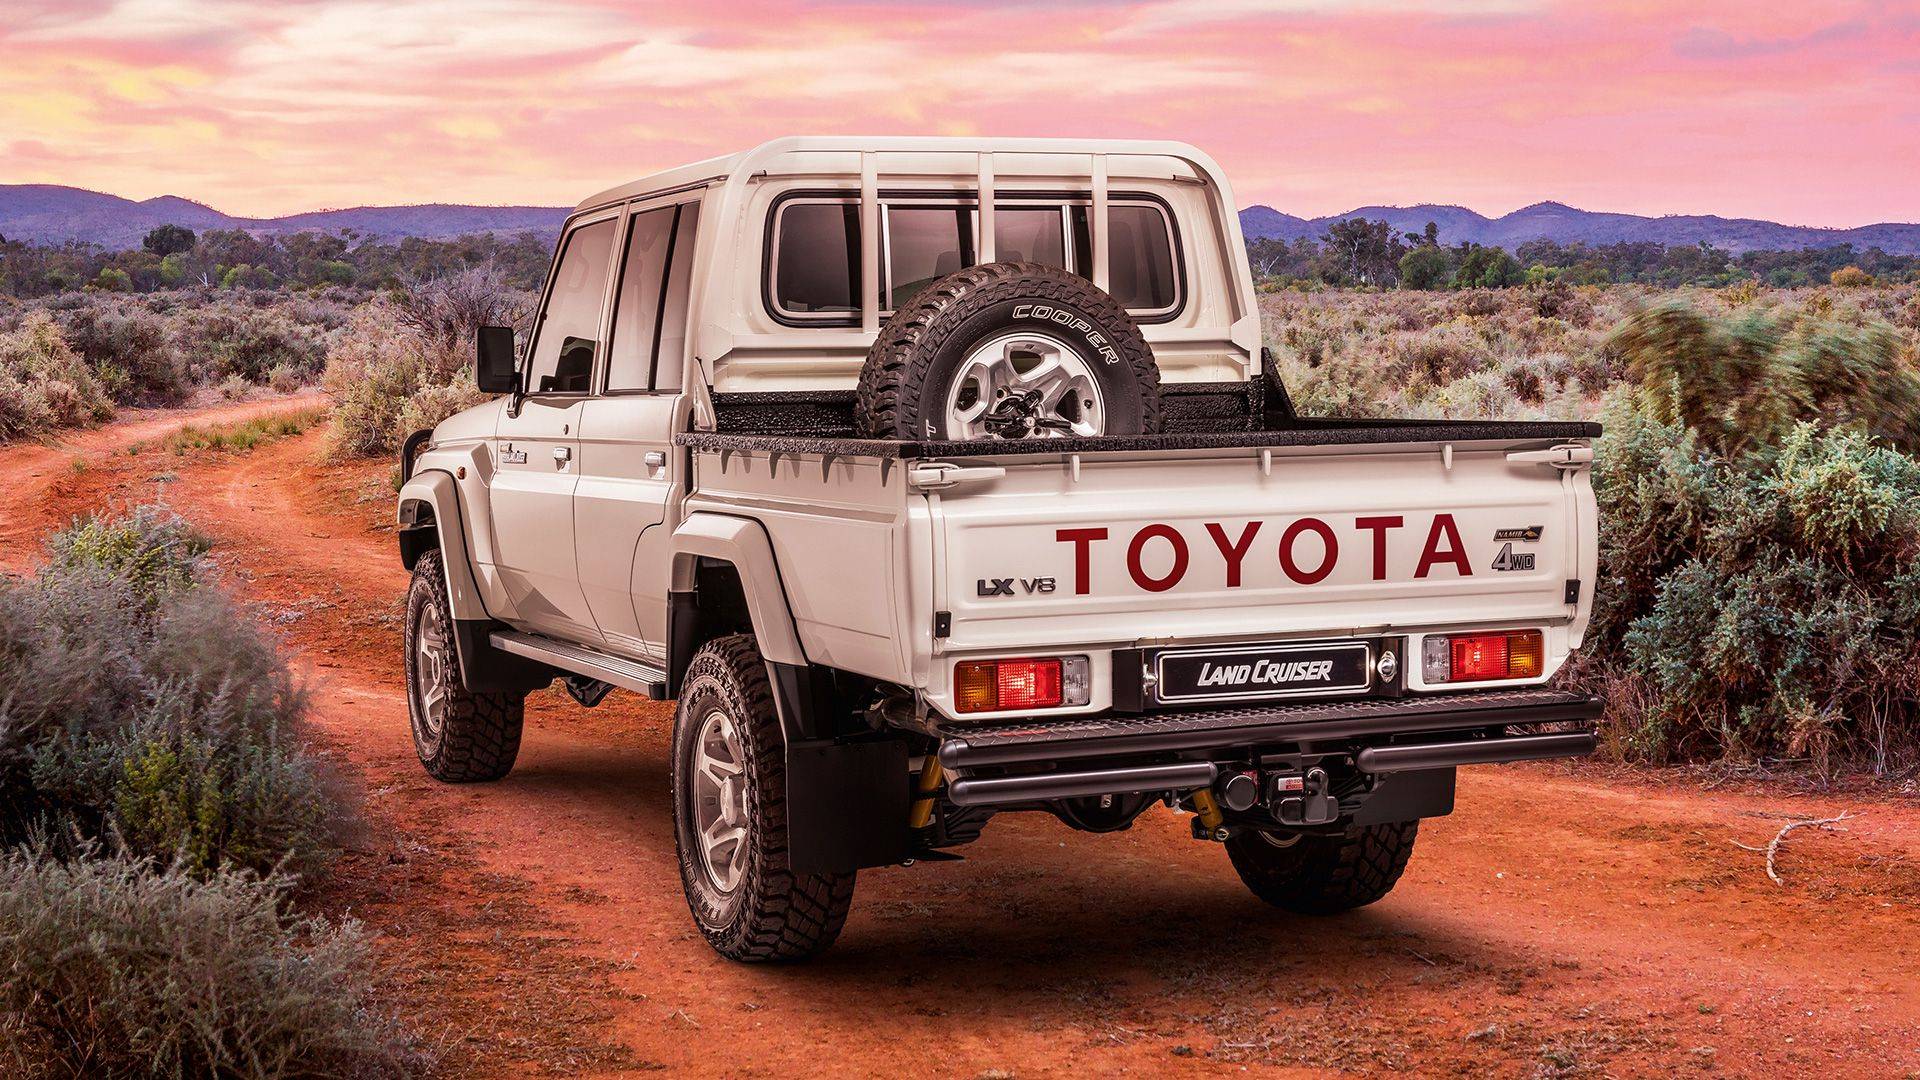 The Toyota Land Cruiser Namib is tremendous